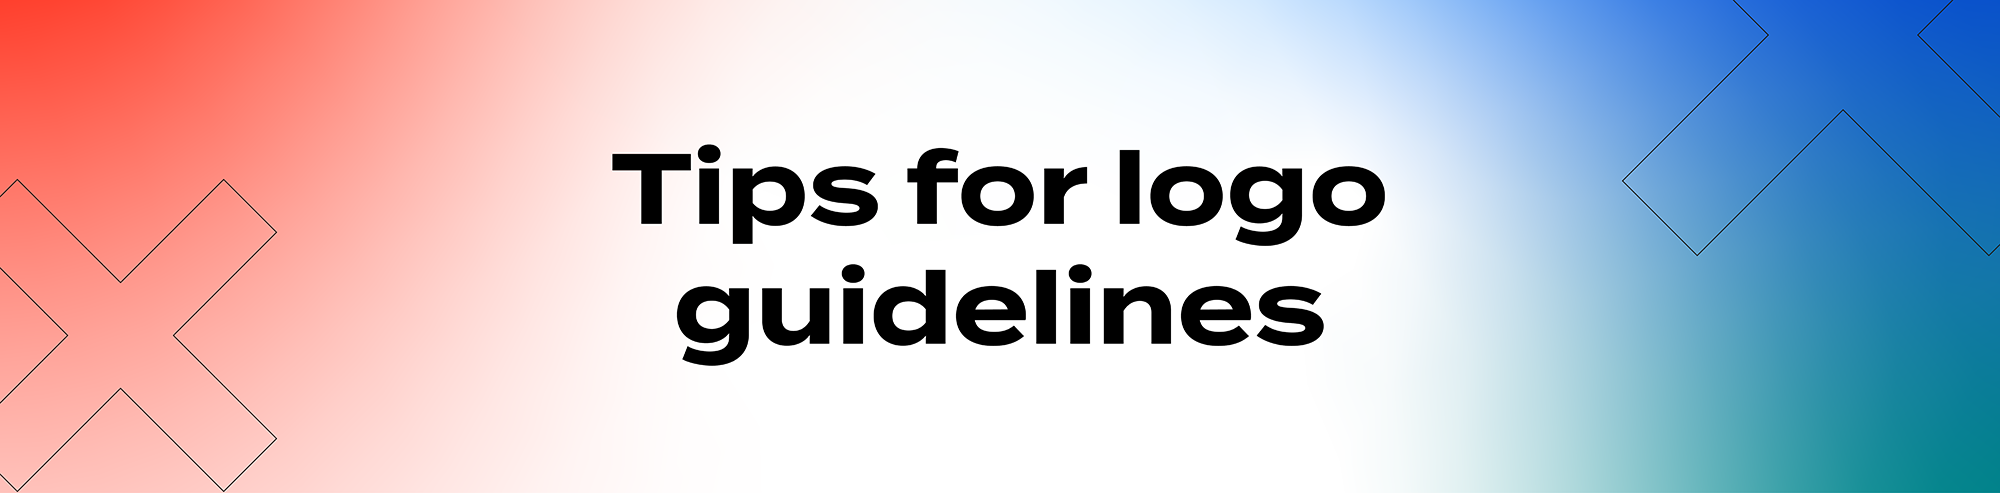 Tips for logo guidelines